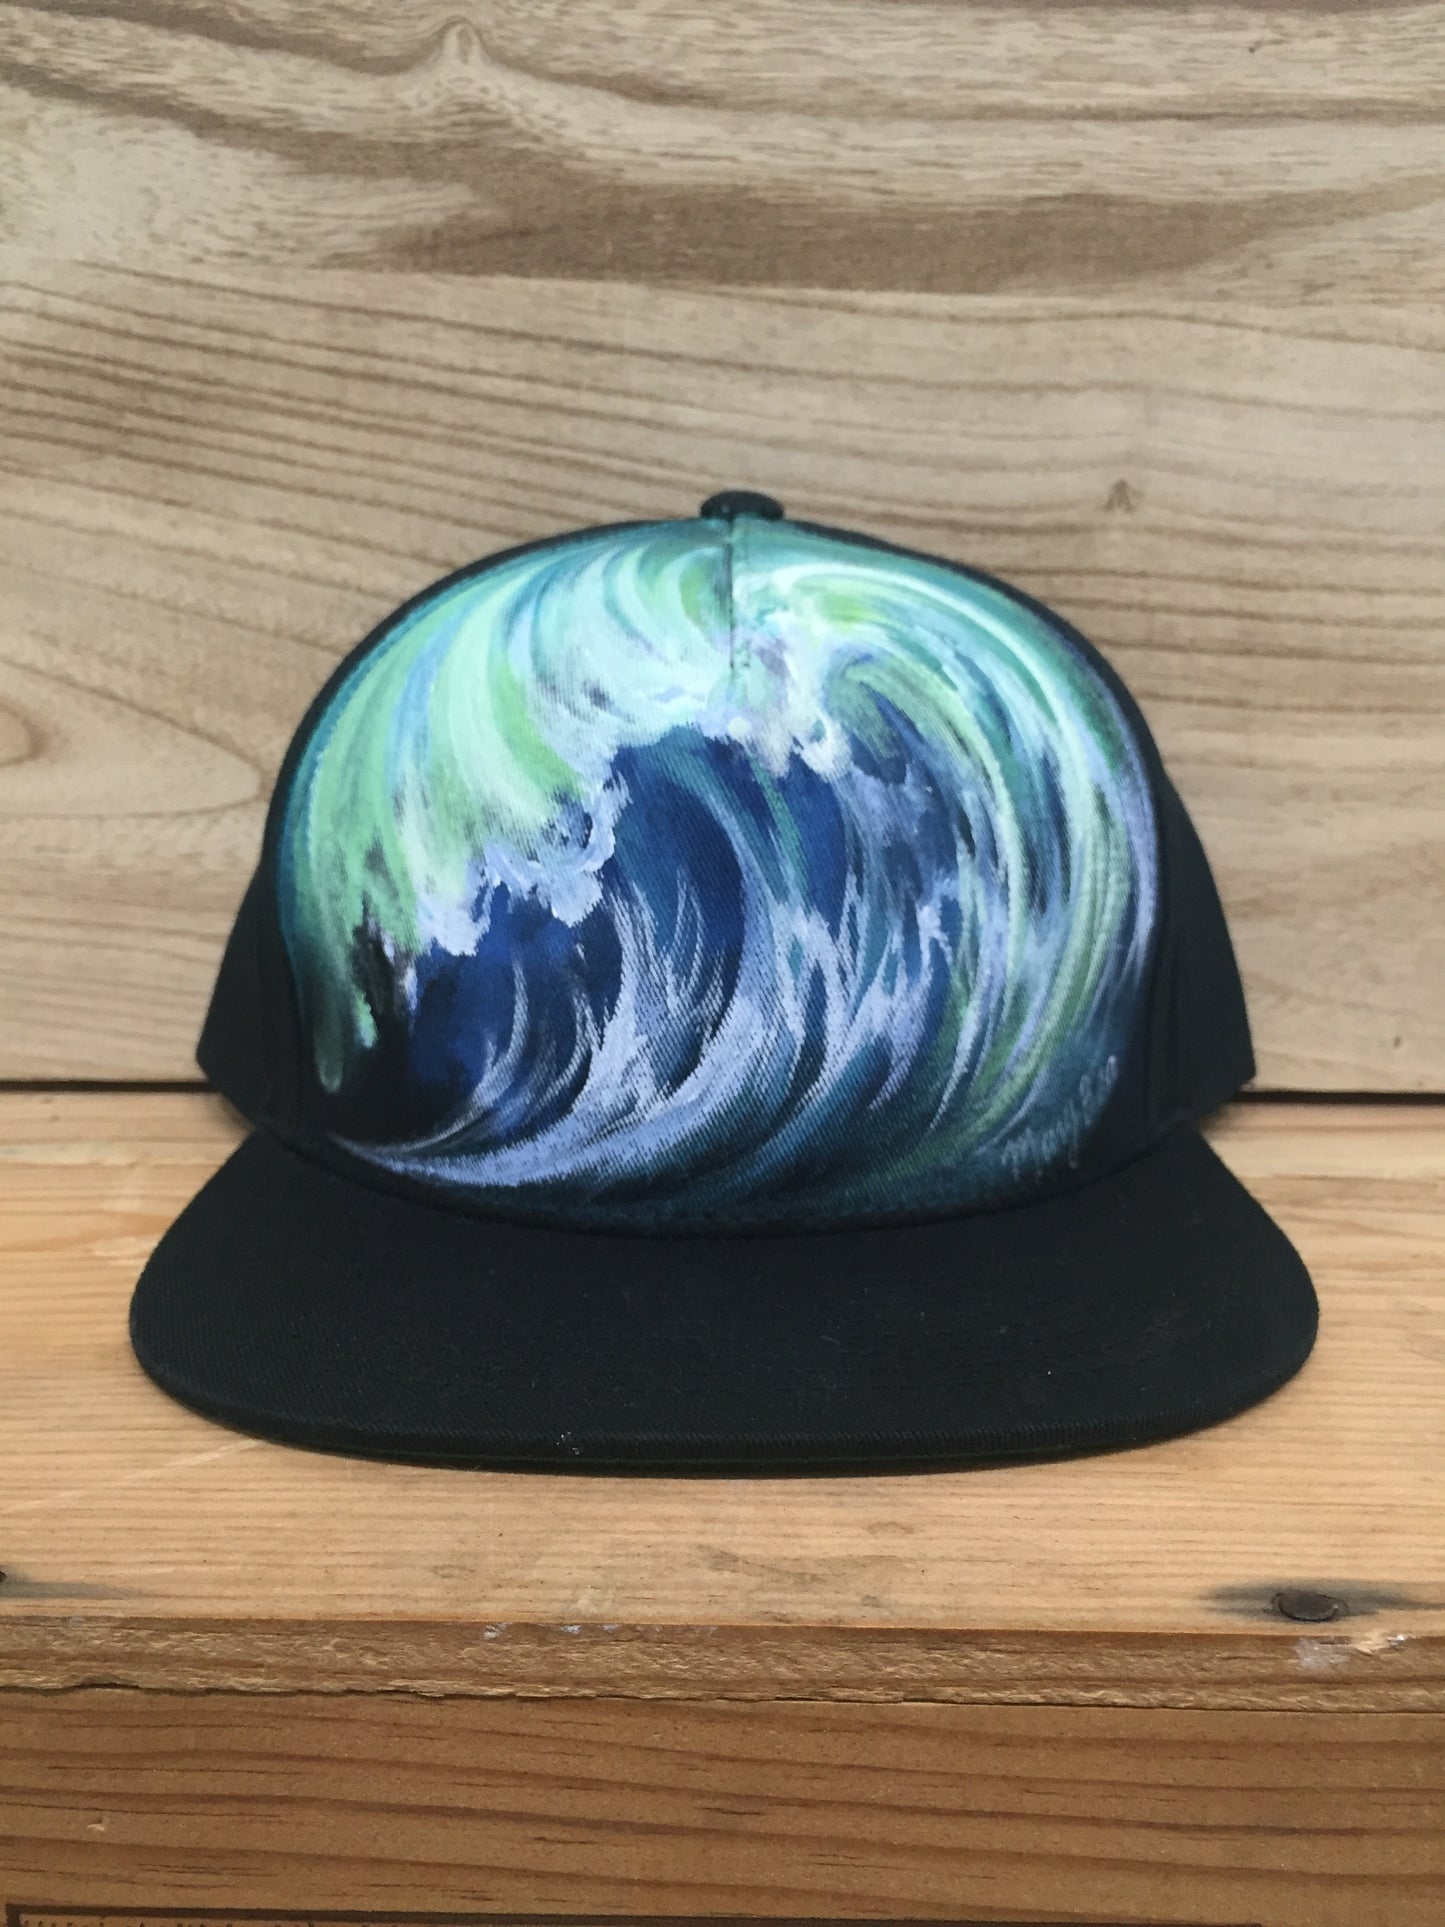 "WaveCurl" Hand Painted on Black Snapback hat